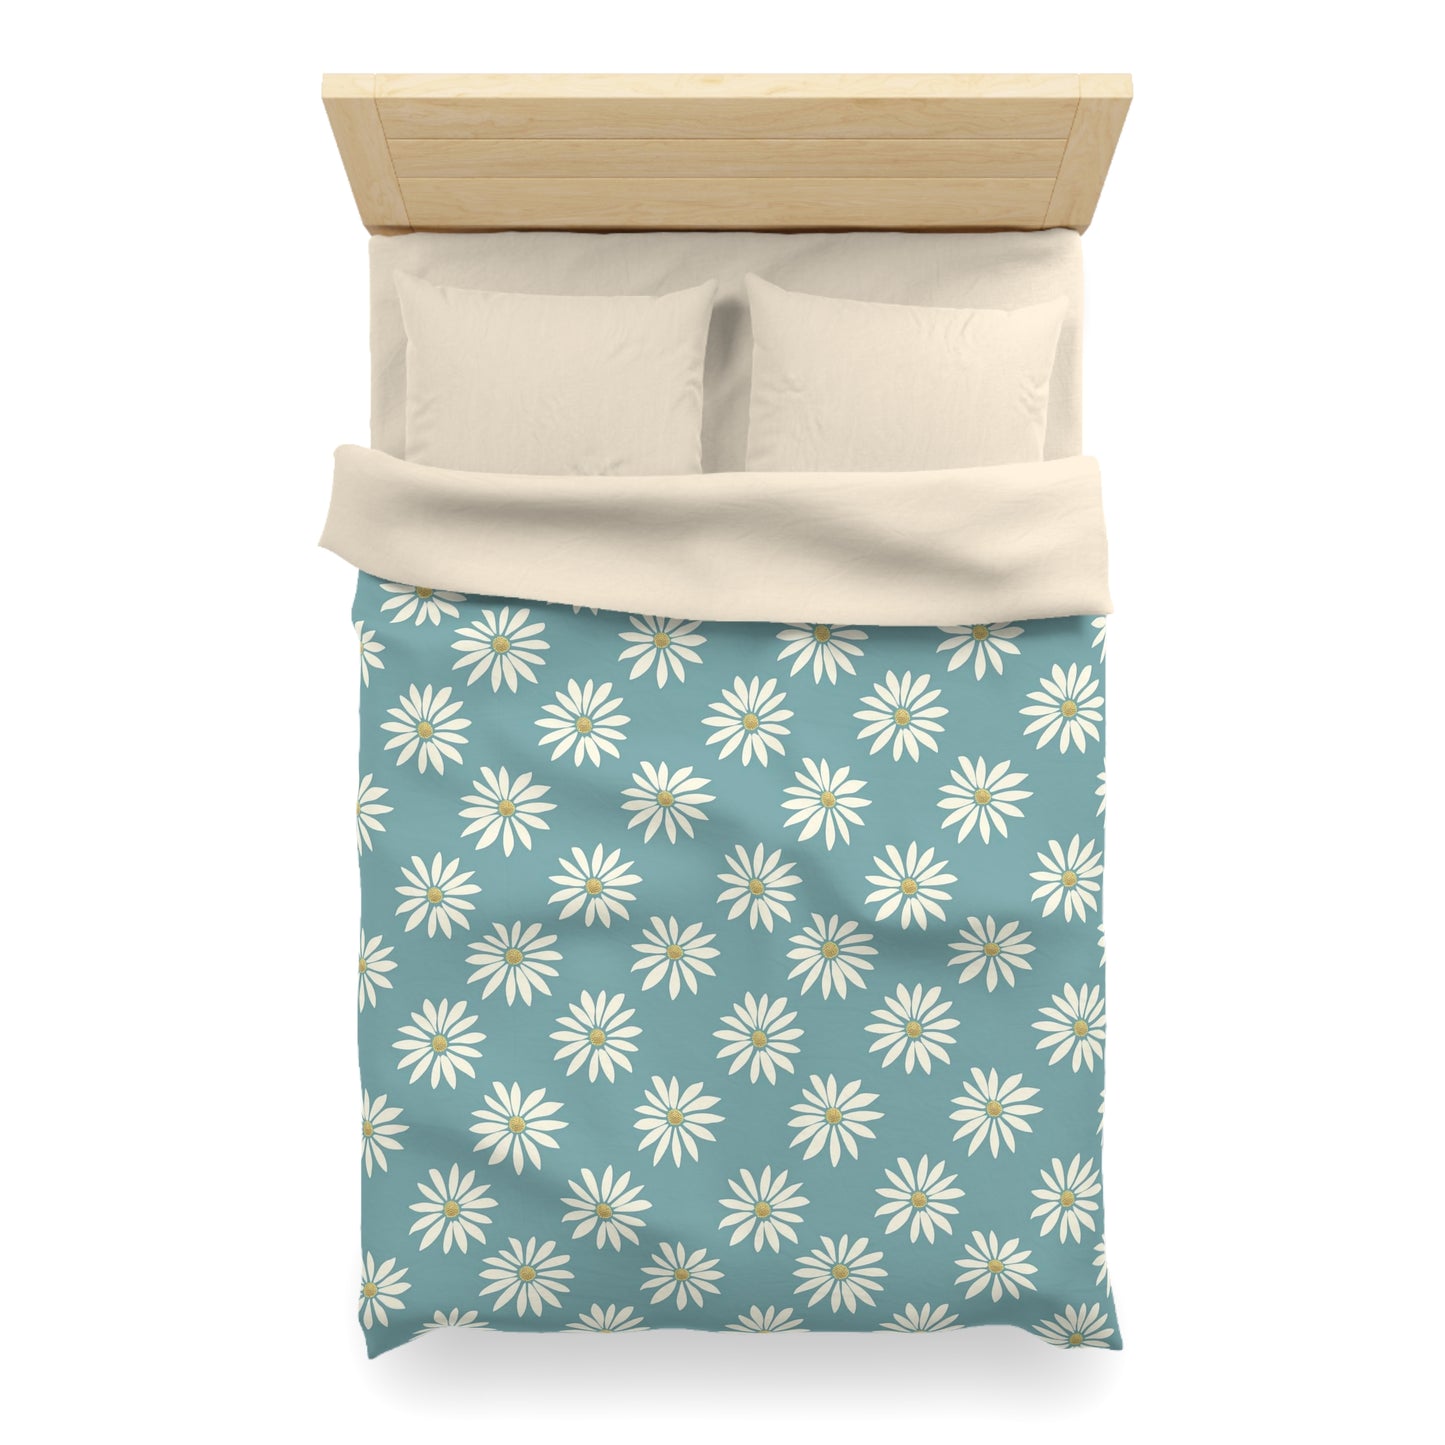 Daisy Duvet Cover, Floral Flowers Blue White Bedding Queen King Full Twin XL Microfiber Unique Designer Bed Quilt Bedroom Decor